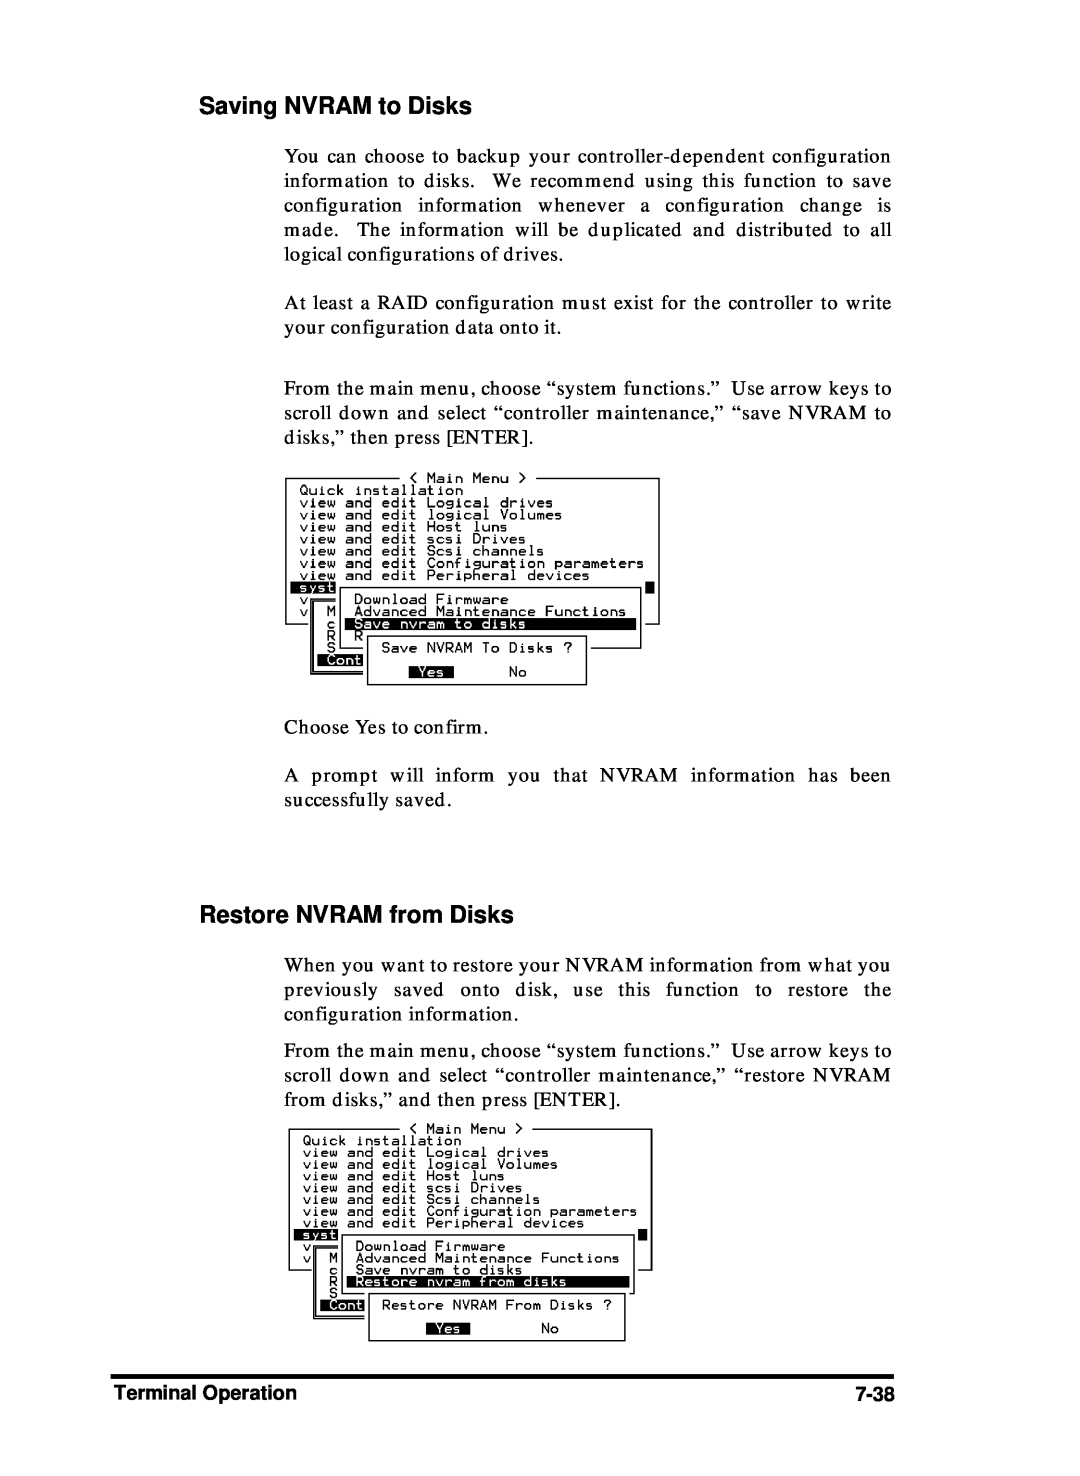 Compaq Infortrend manual Saving NVRAM to Disks, Restore NVRAM from Disks, Terminal Operation, 7-38 